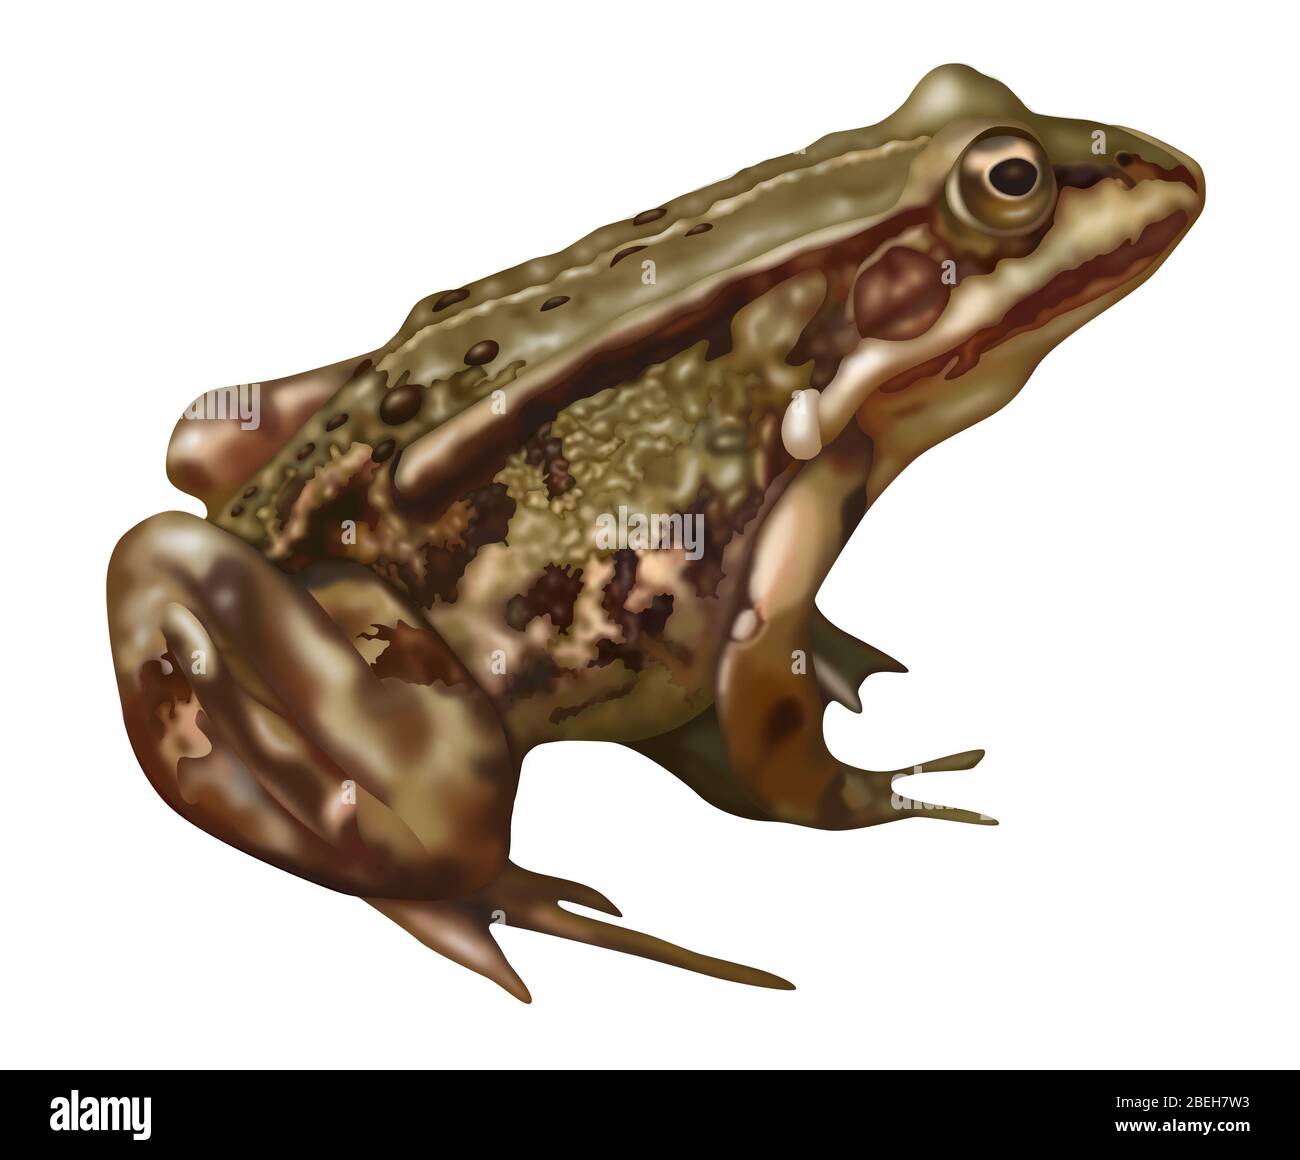 Frog Anatomy, Illustration Stock Photo